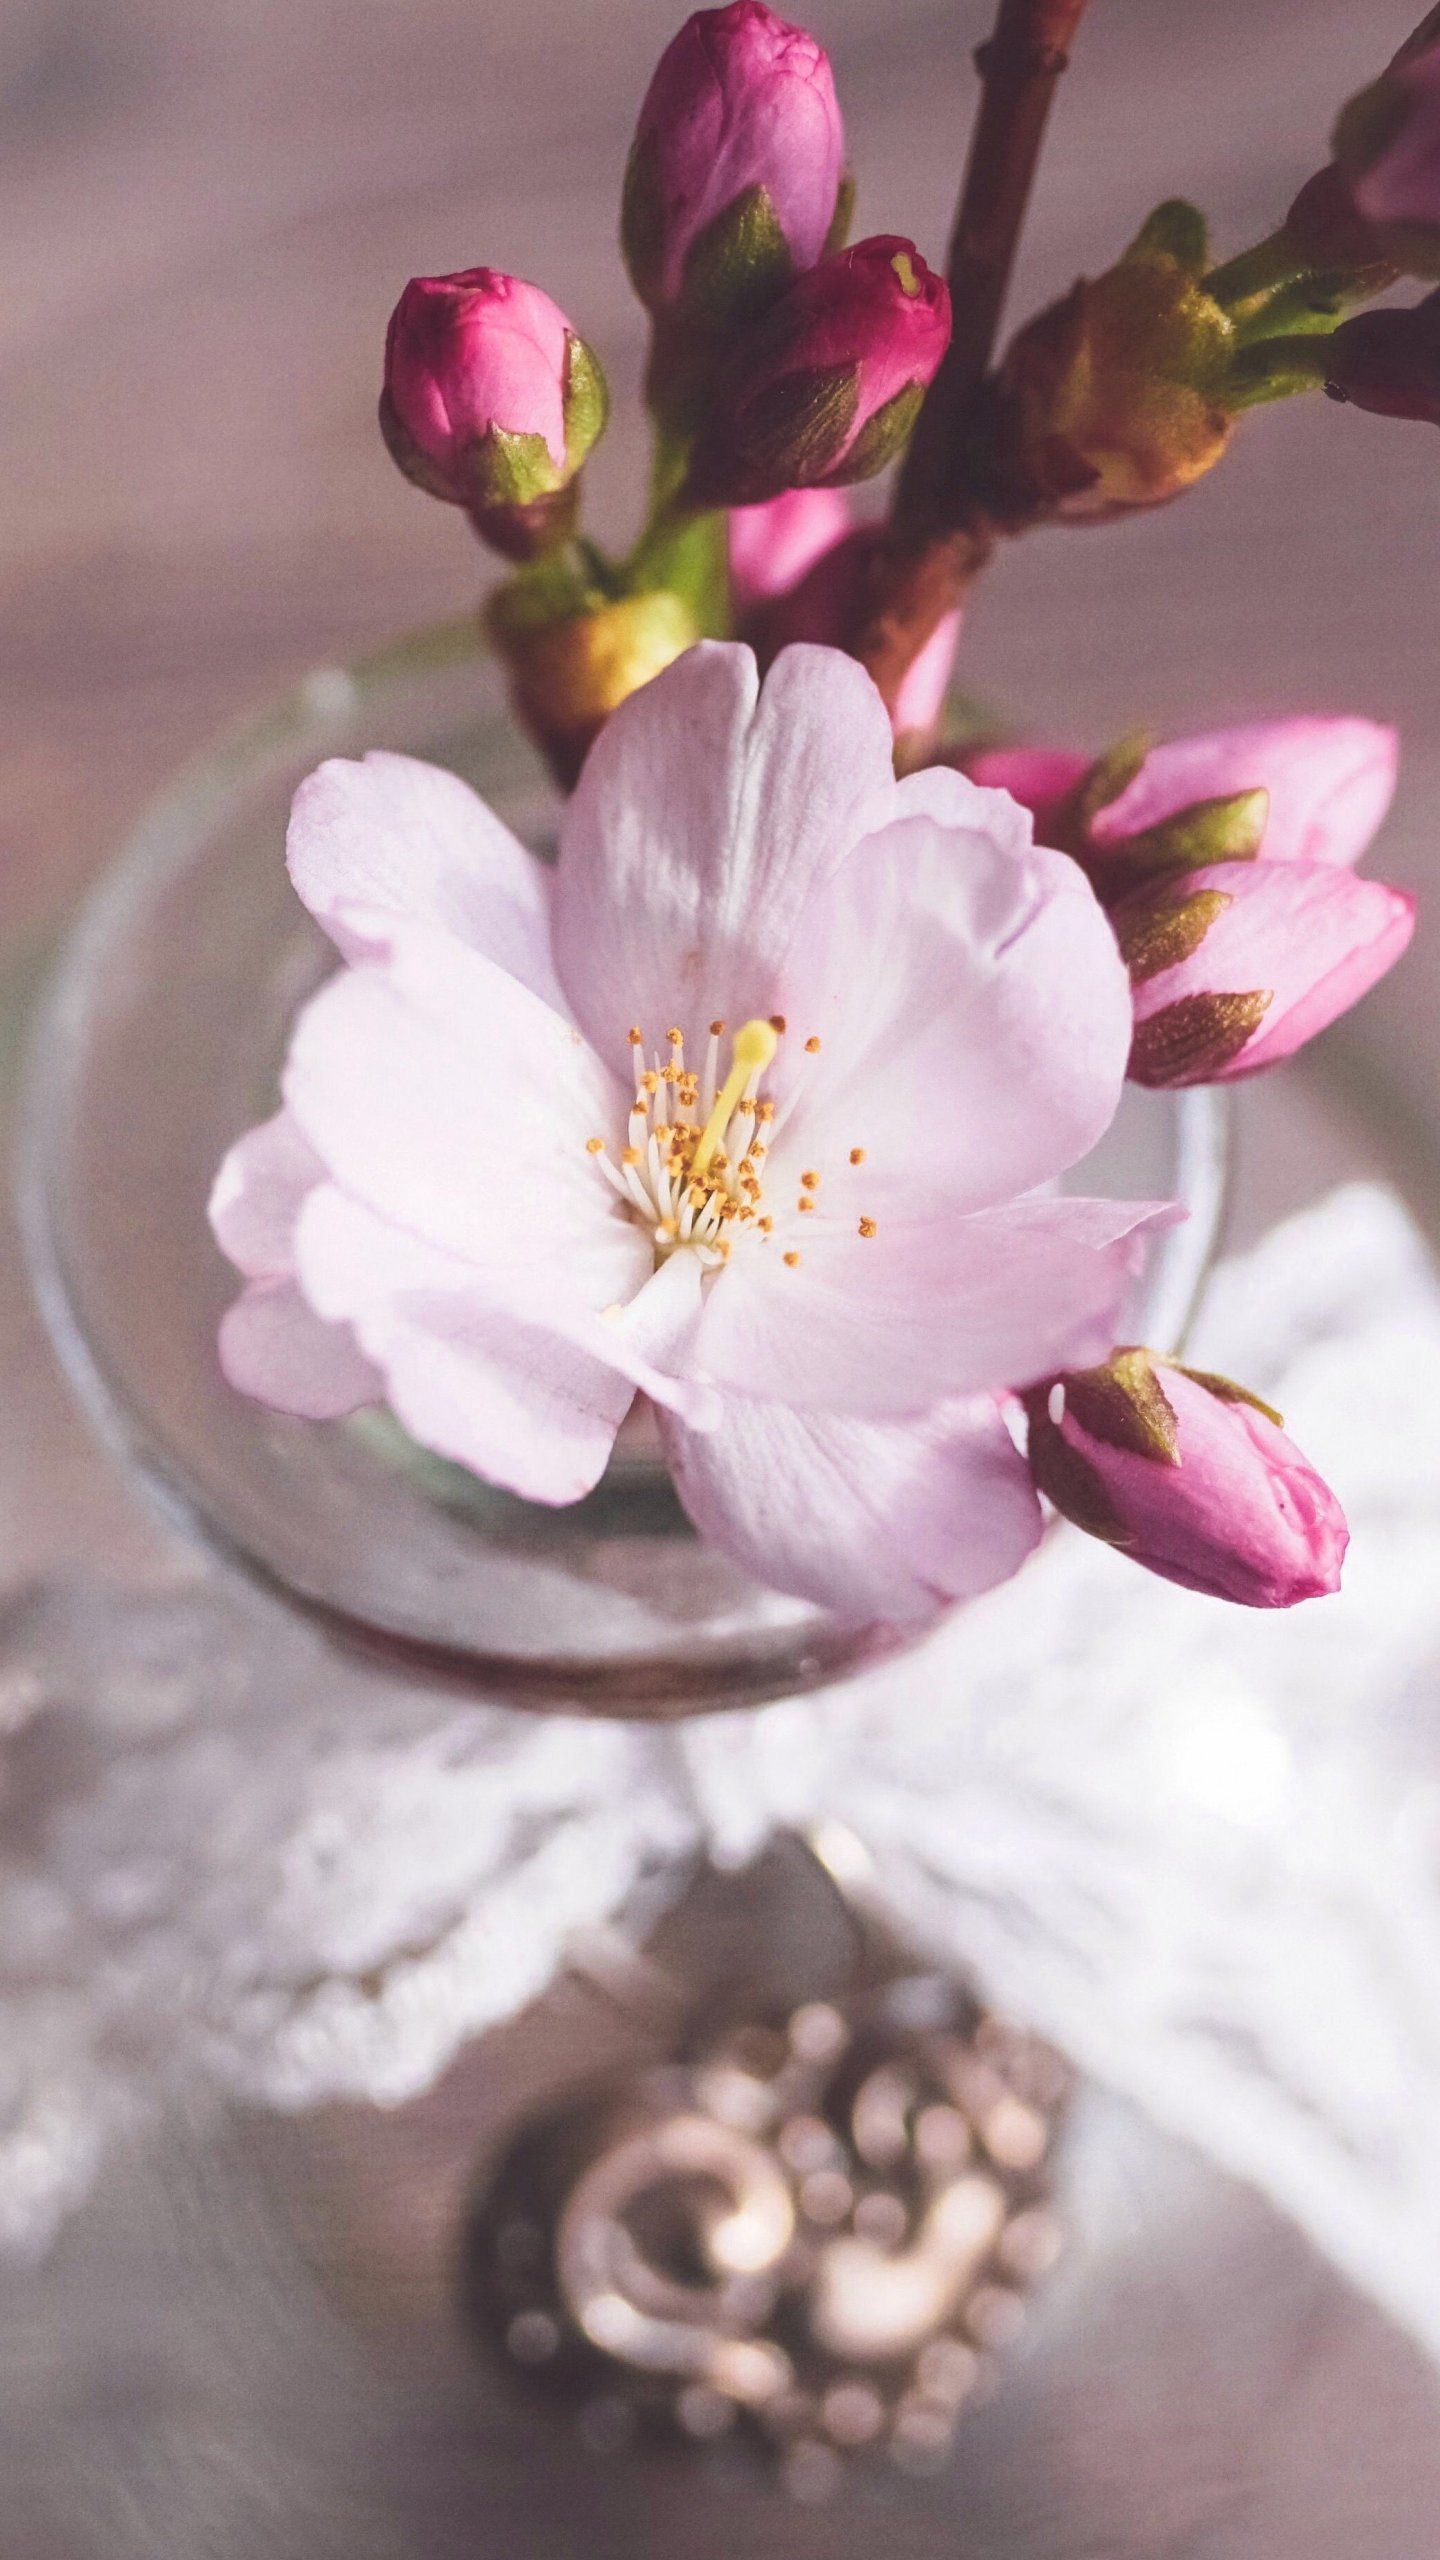 Romantic Pink Cherry Blossom Flowers in Vase Wallpaper